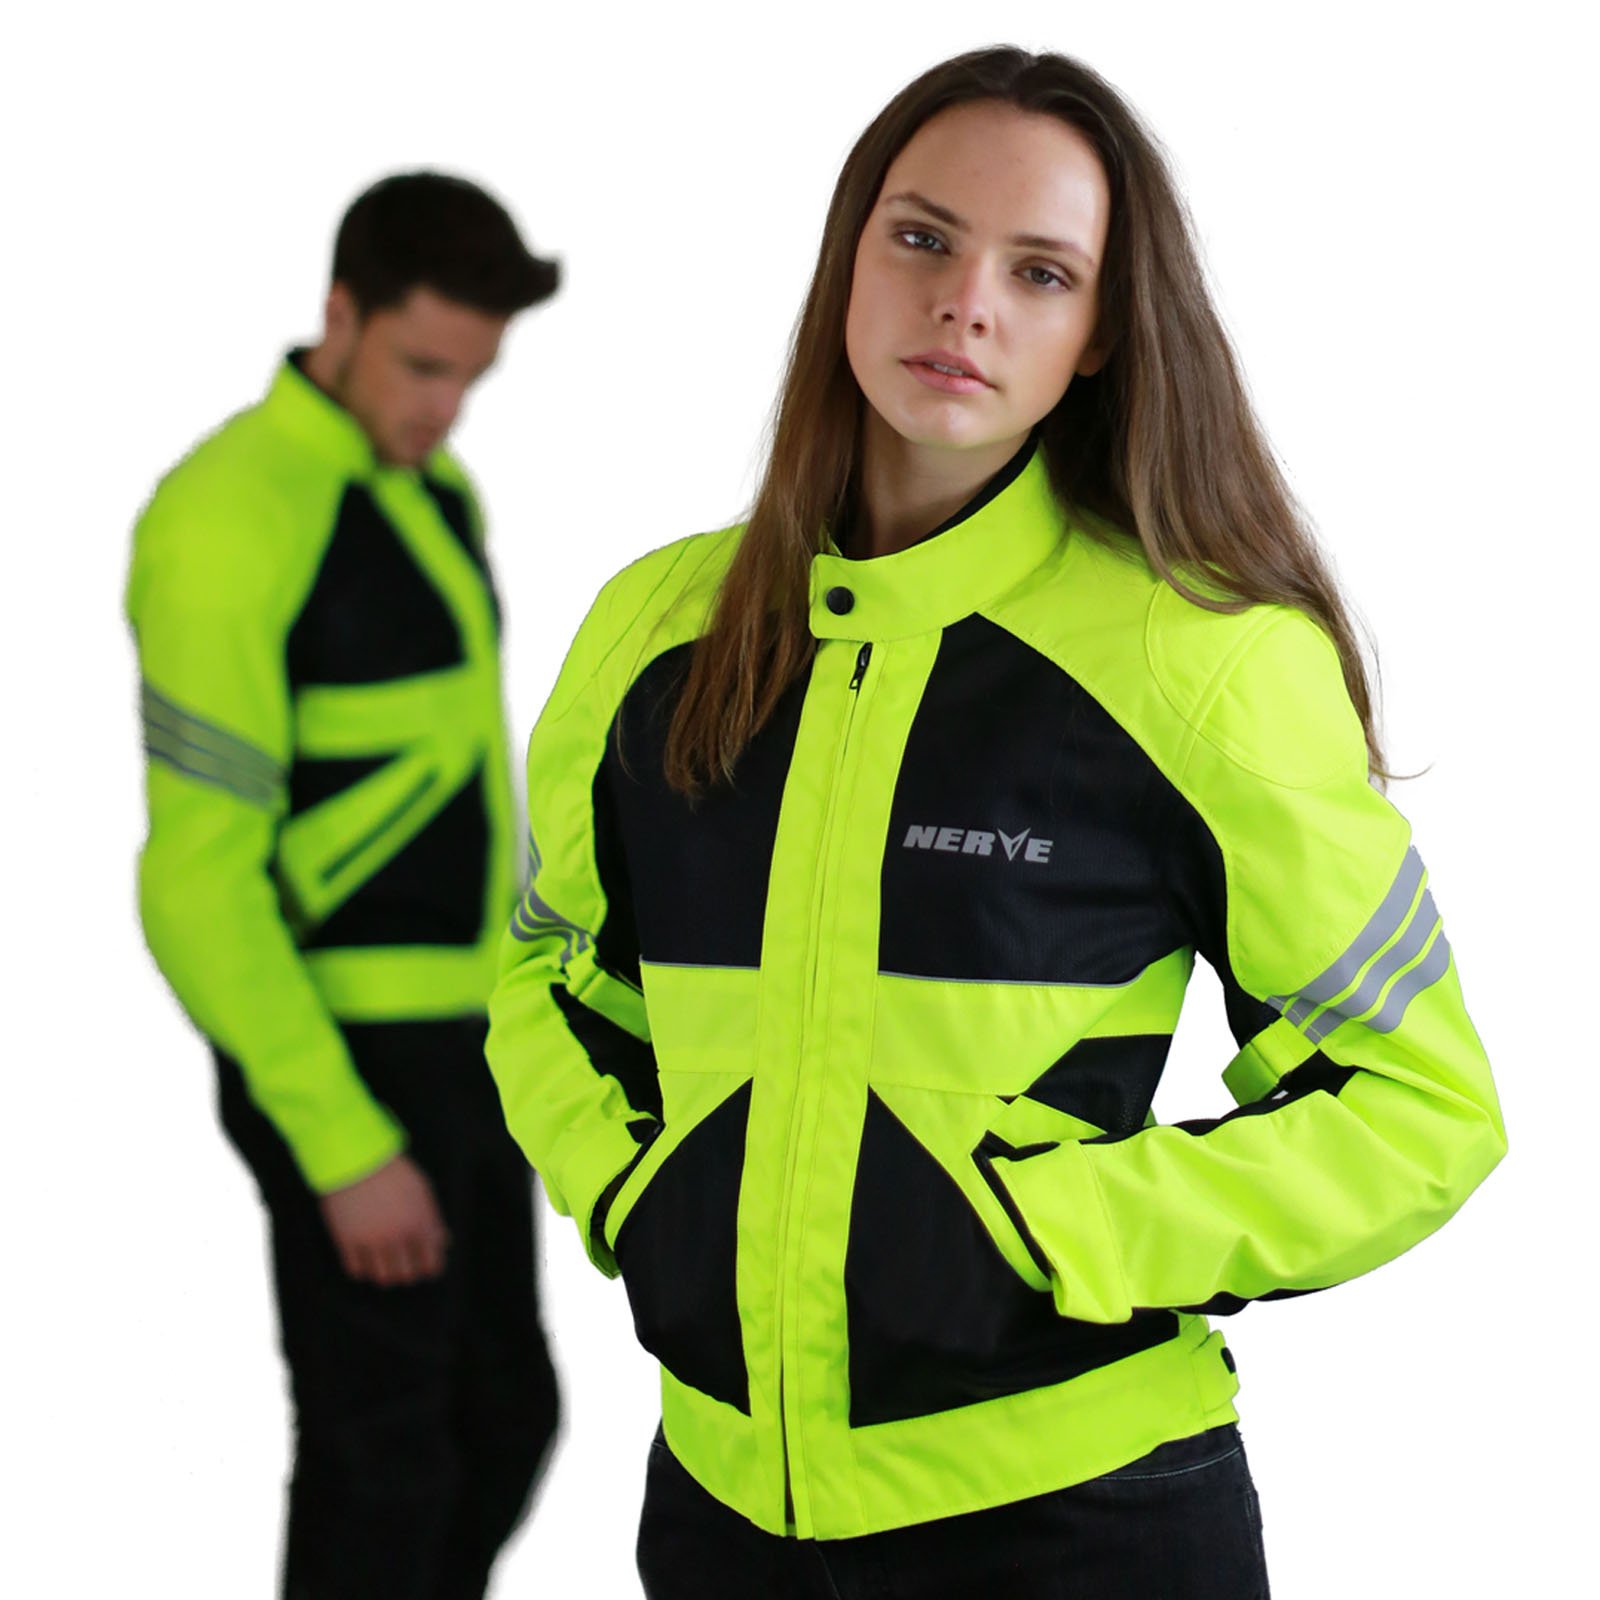 Nerve Shop Dünne Motorradjacke -Go- Motorrad Sommerjacke Protektorenjacke Damen Sommer Jacke Kurz Elegant Leicht Textil Mesh - schwarz-neon-grün-gelb - M